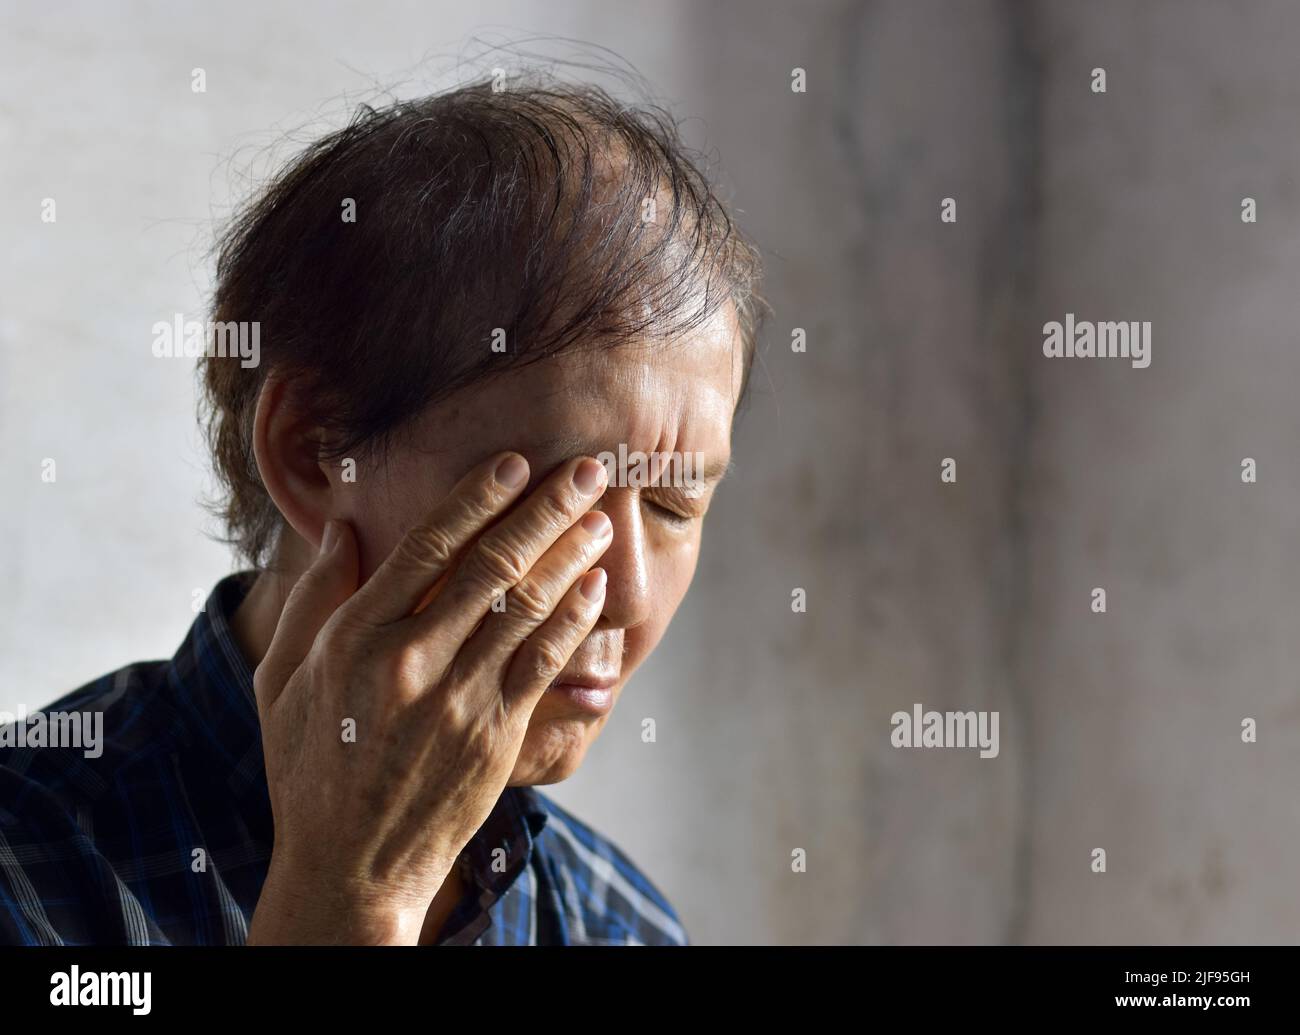 Asian elder man rubbing his eye. Concept of eye strain or itchy eyelid. Stock Photo